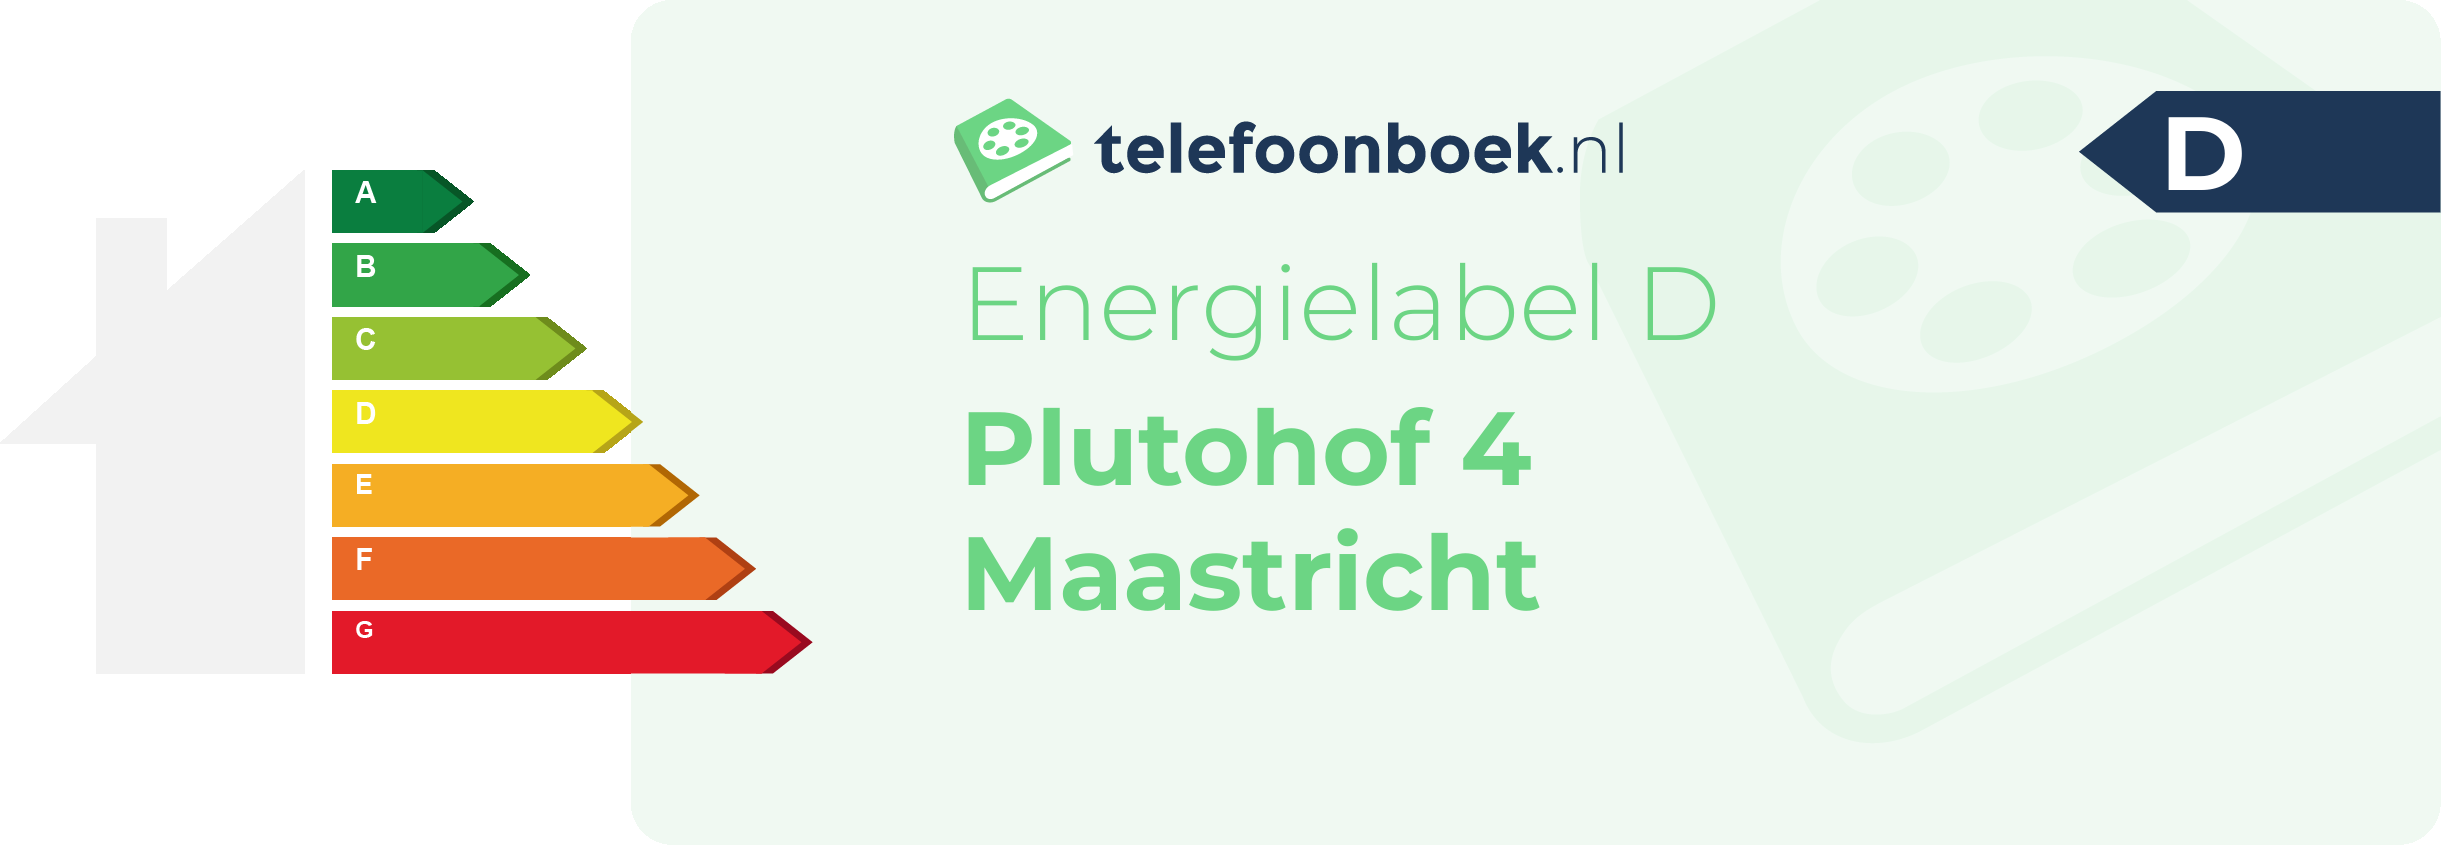 Energielabel Plutohof 4 Maastricht